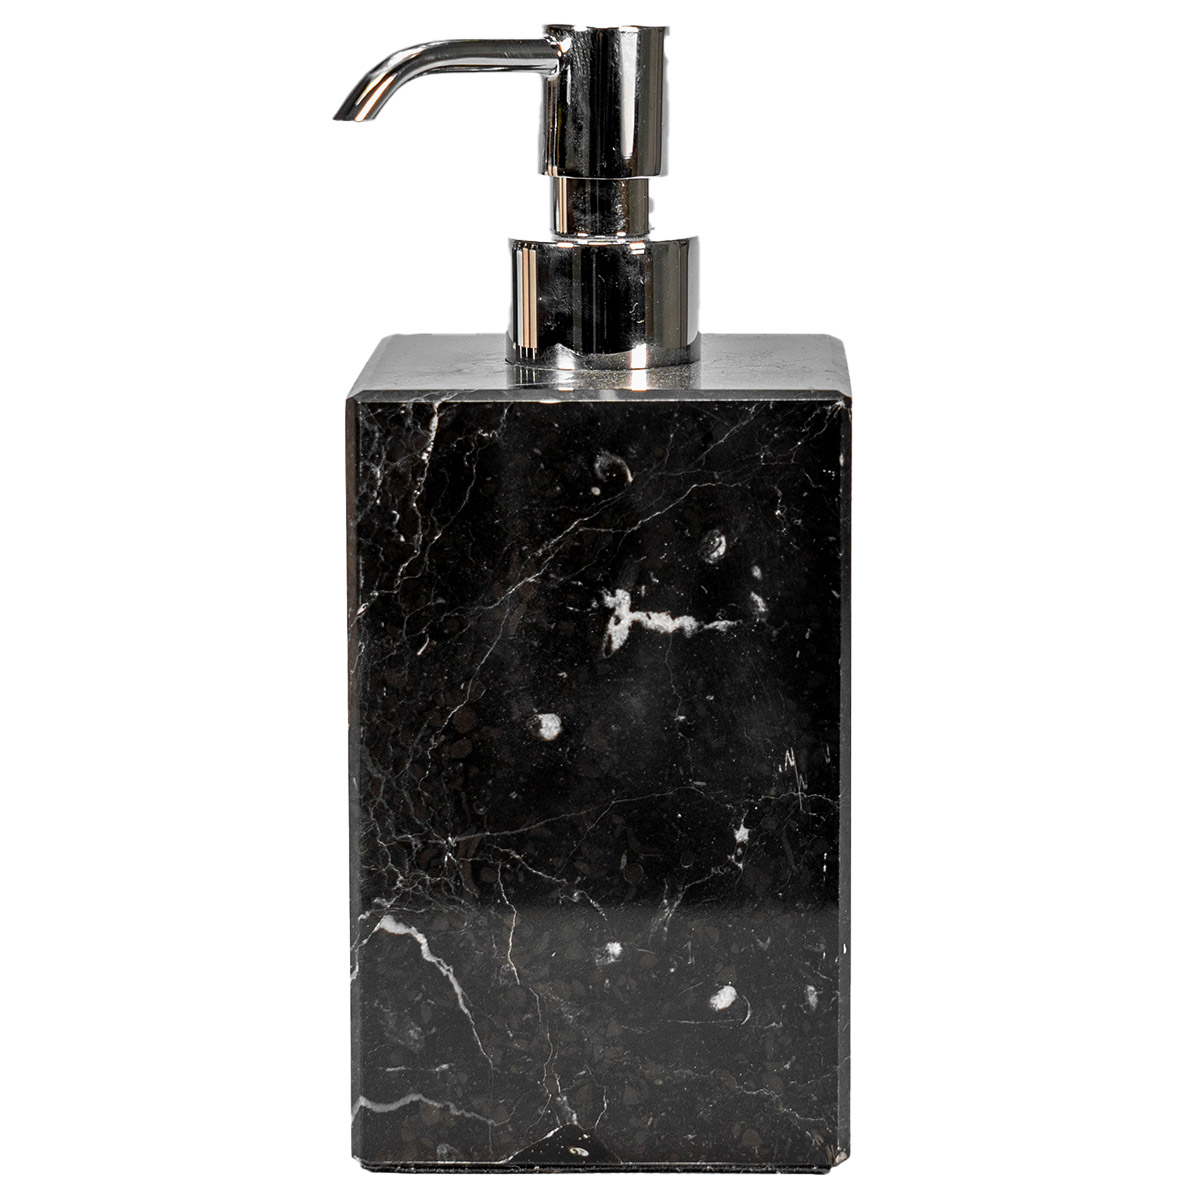 Dispenser per sapone Quadro by Carrara Home Design 